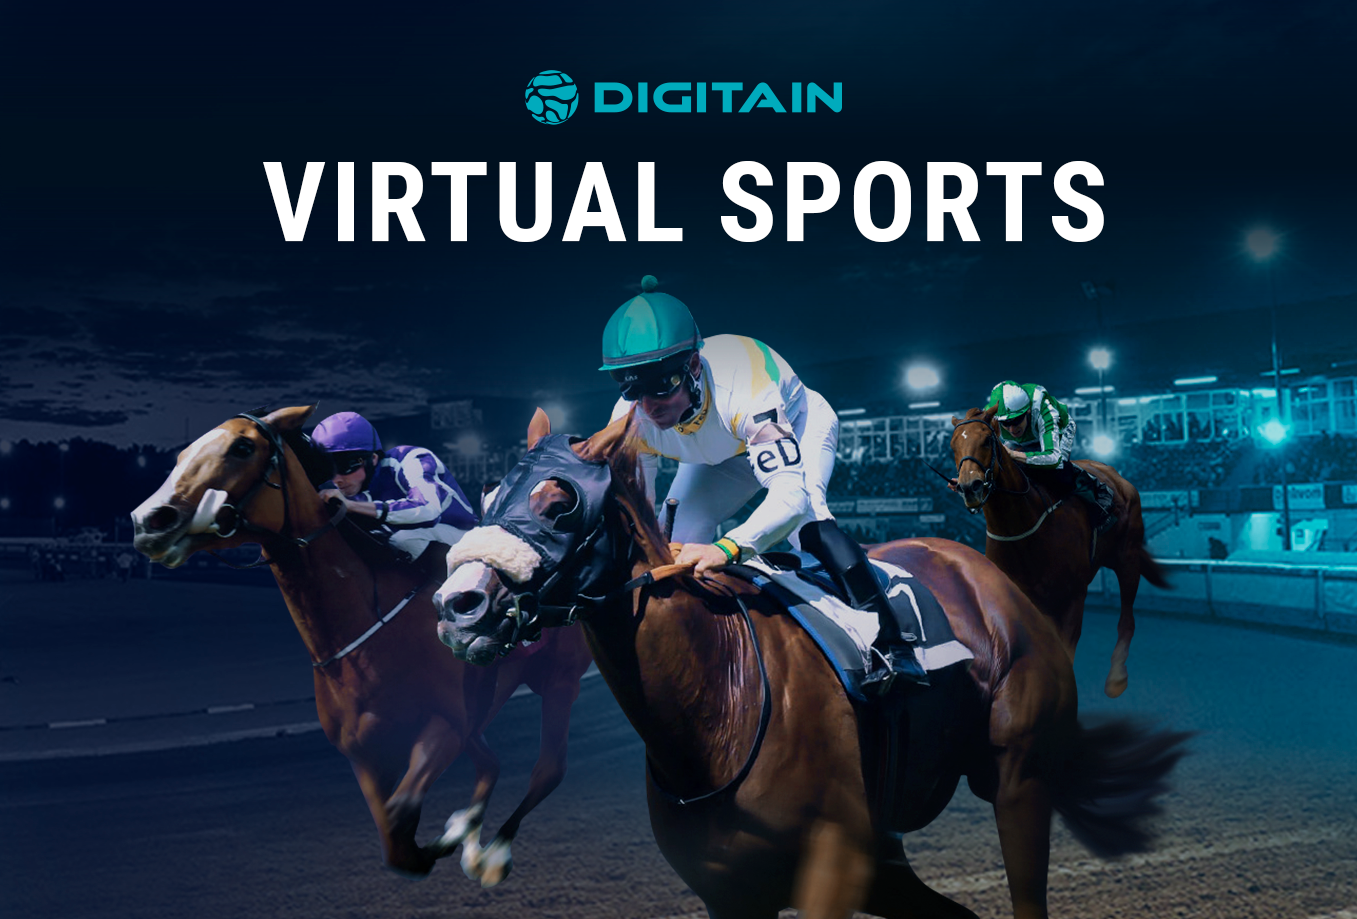 Digitain Virtual Sports